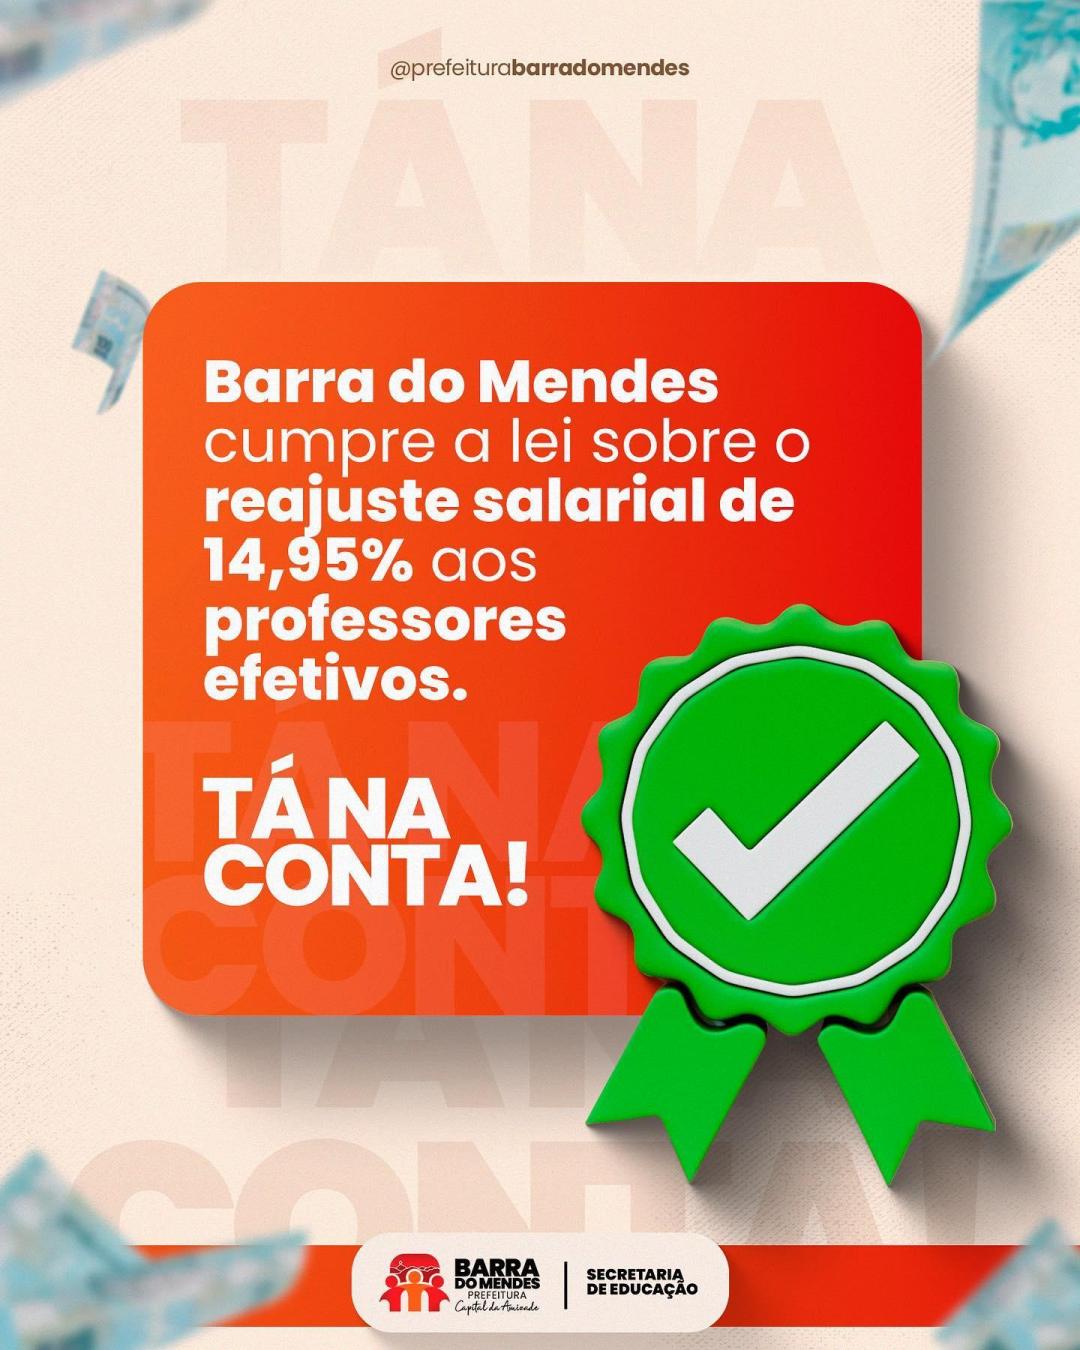 Barra do Mendes cumpre a lei sobre o reajuste salarial de 14,95% aos professores efetivos.